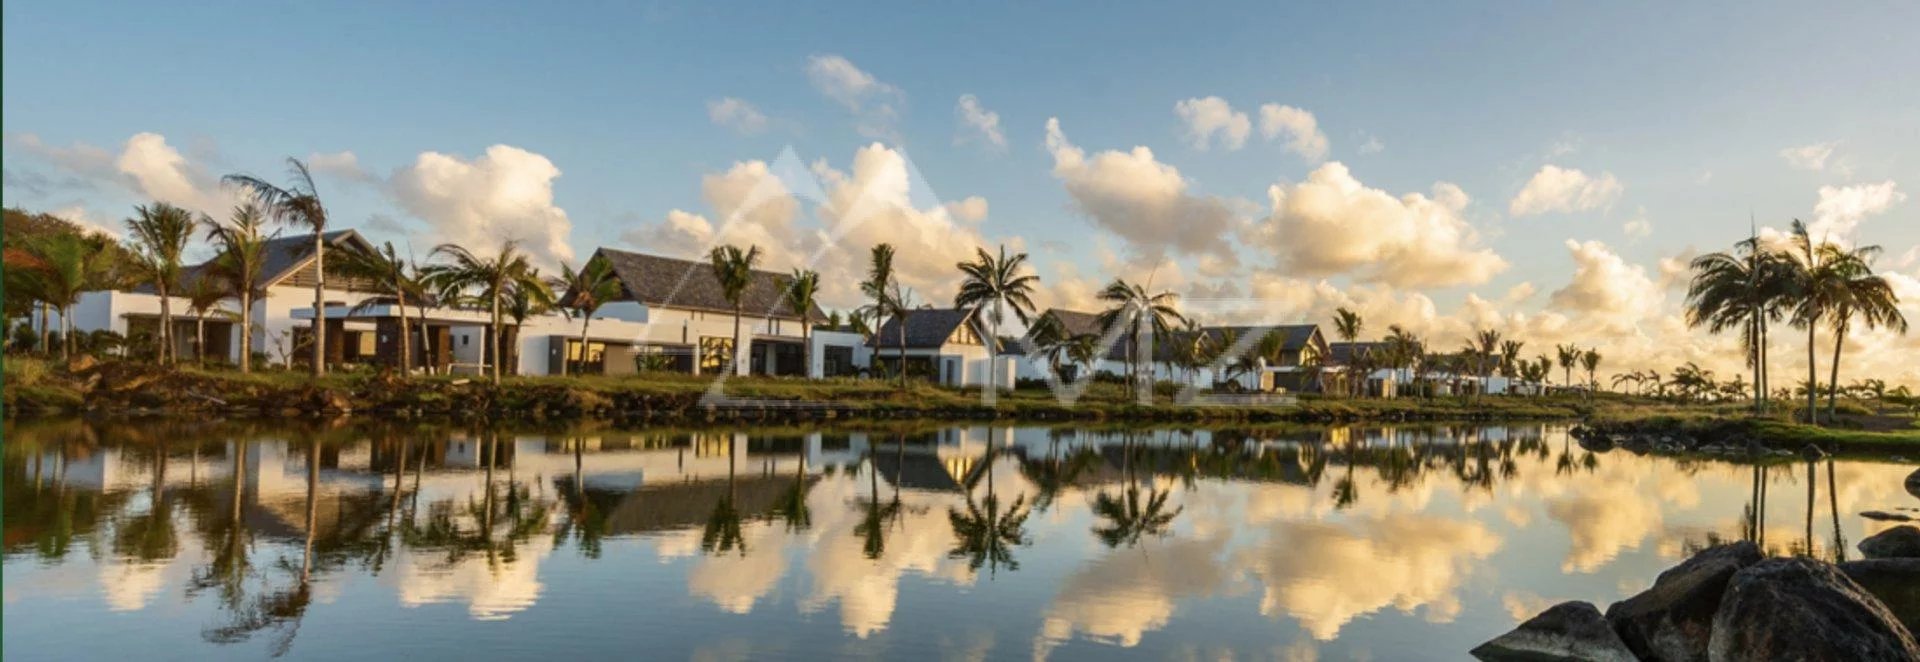 Mauritius - Golfen villa - Mont choisy